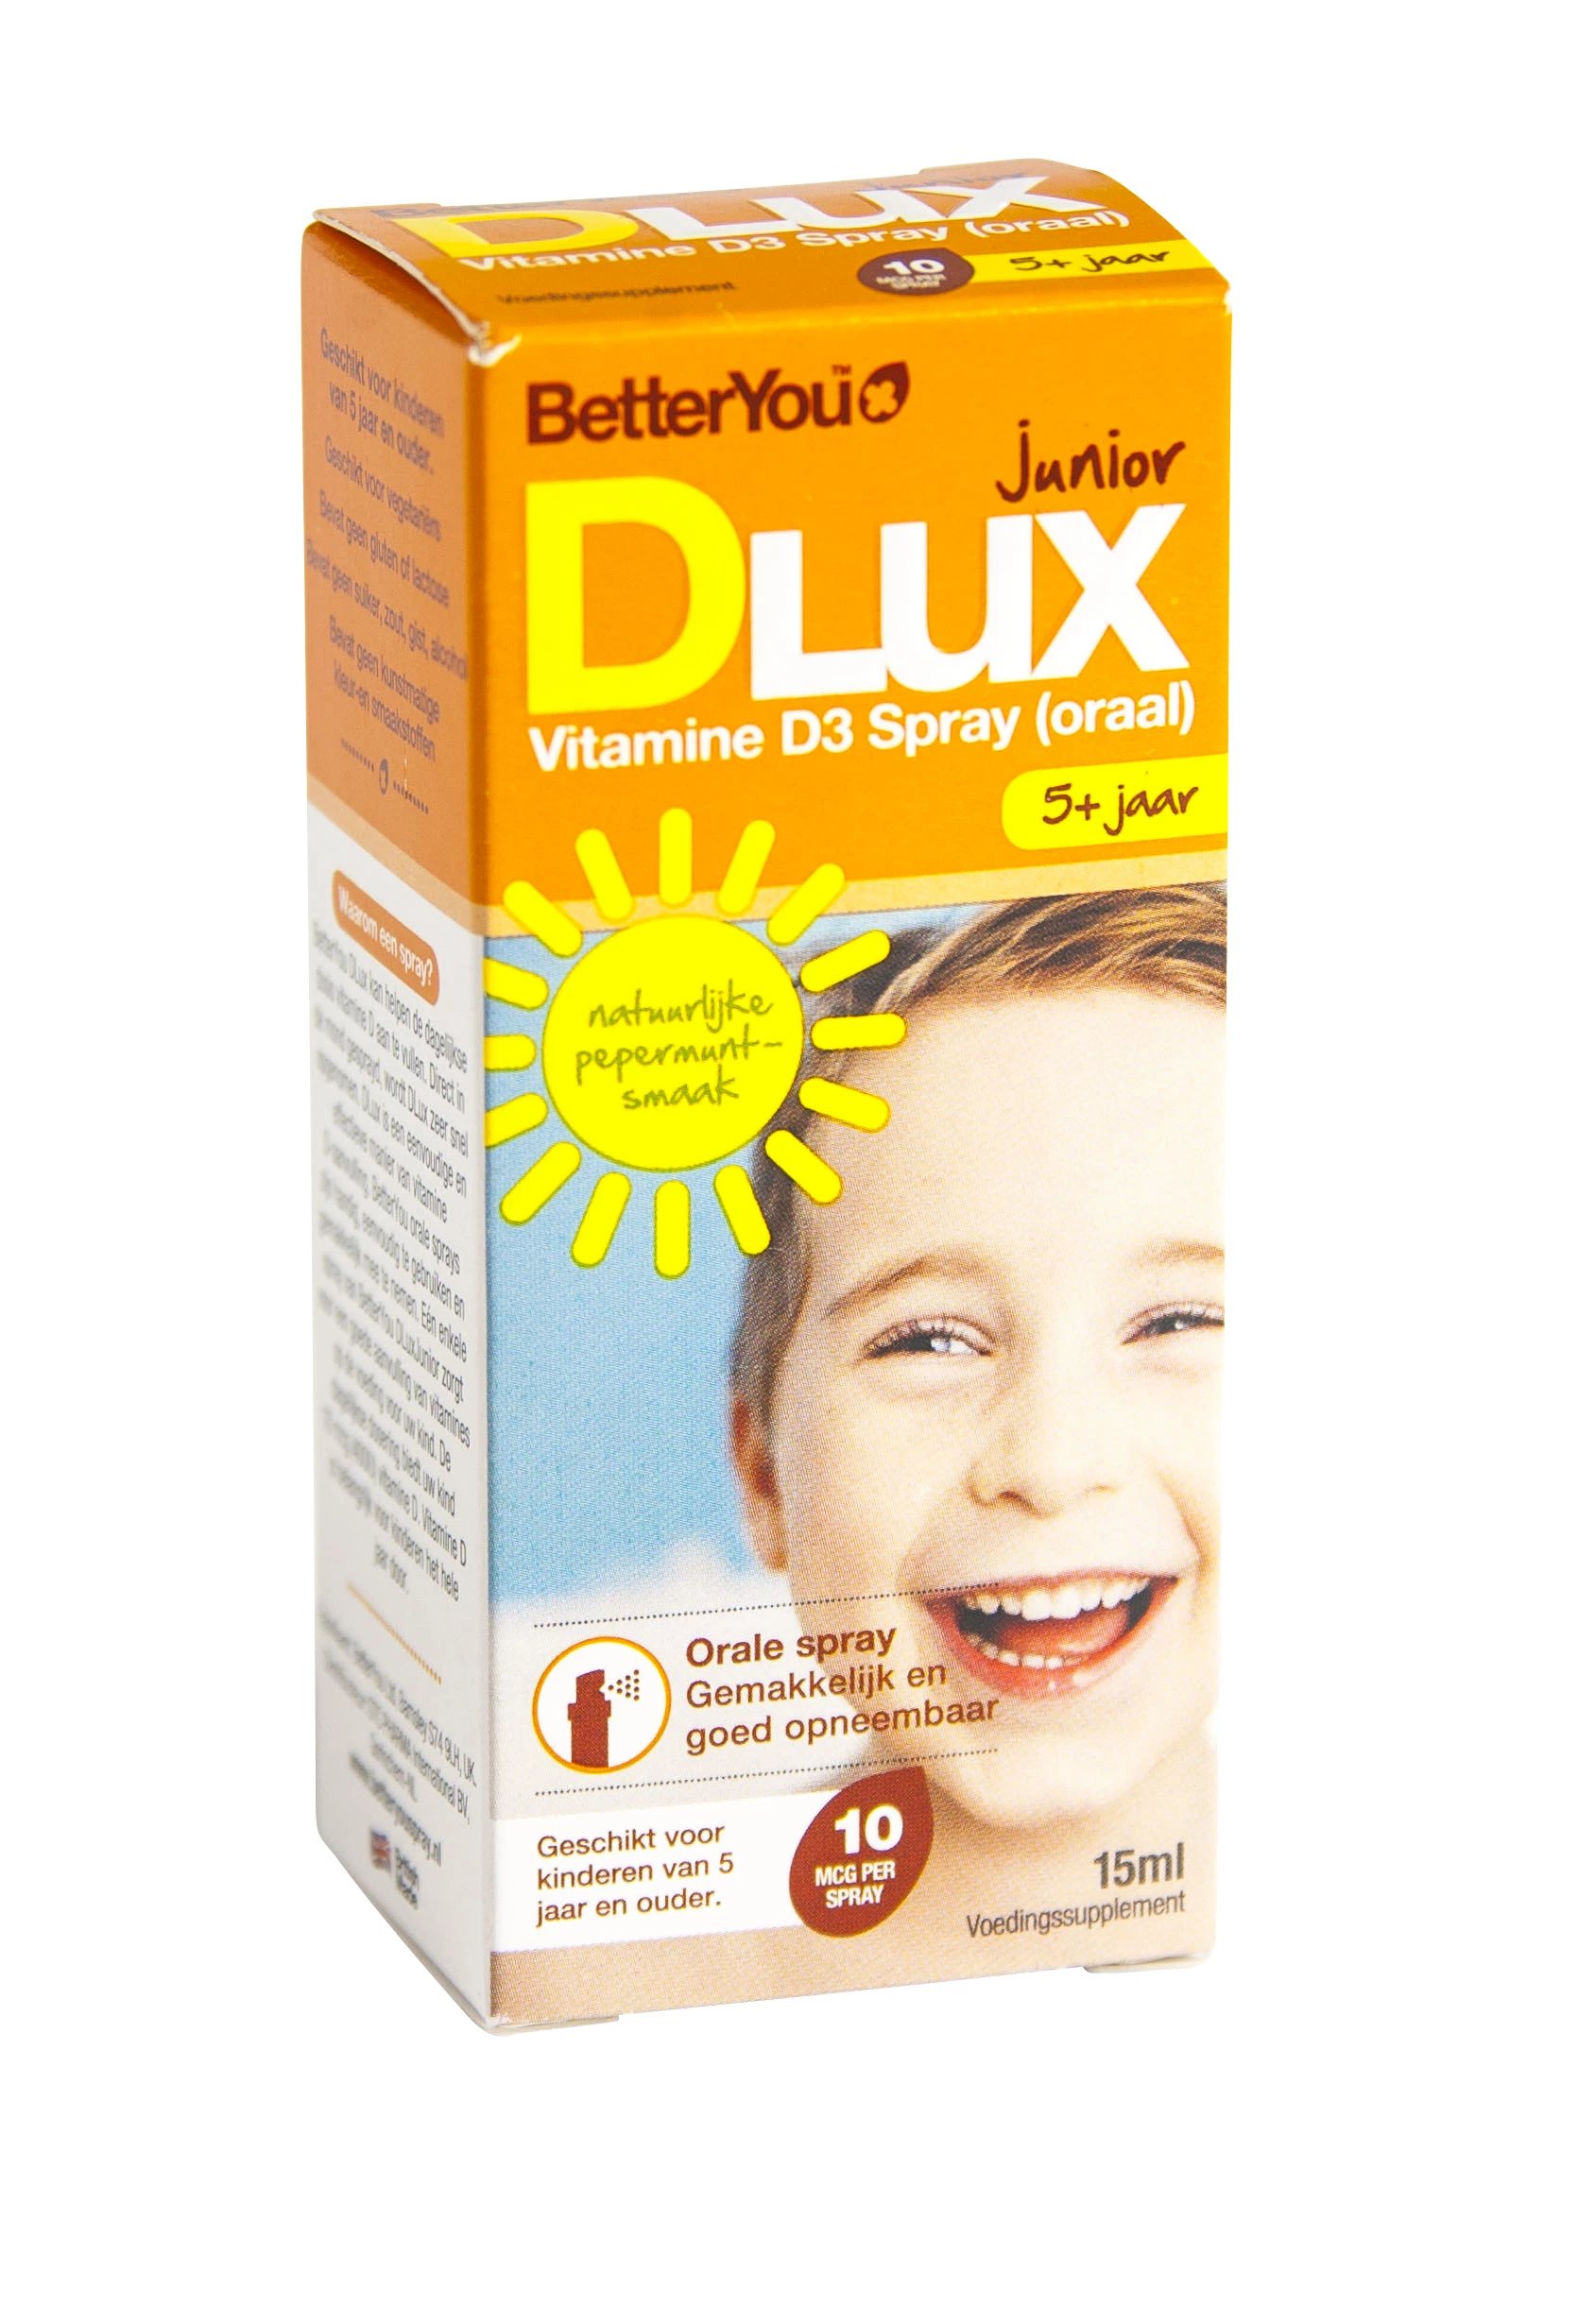 DLux Junior Vitamin D3 Spray